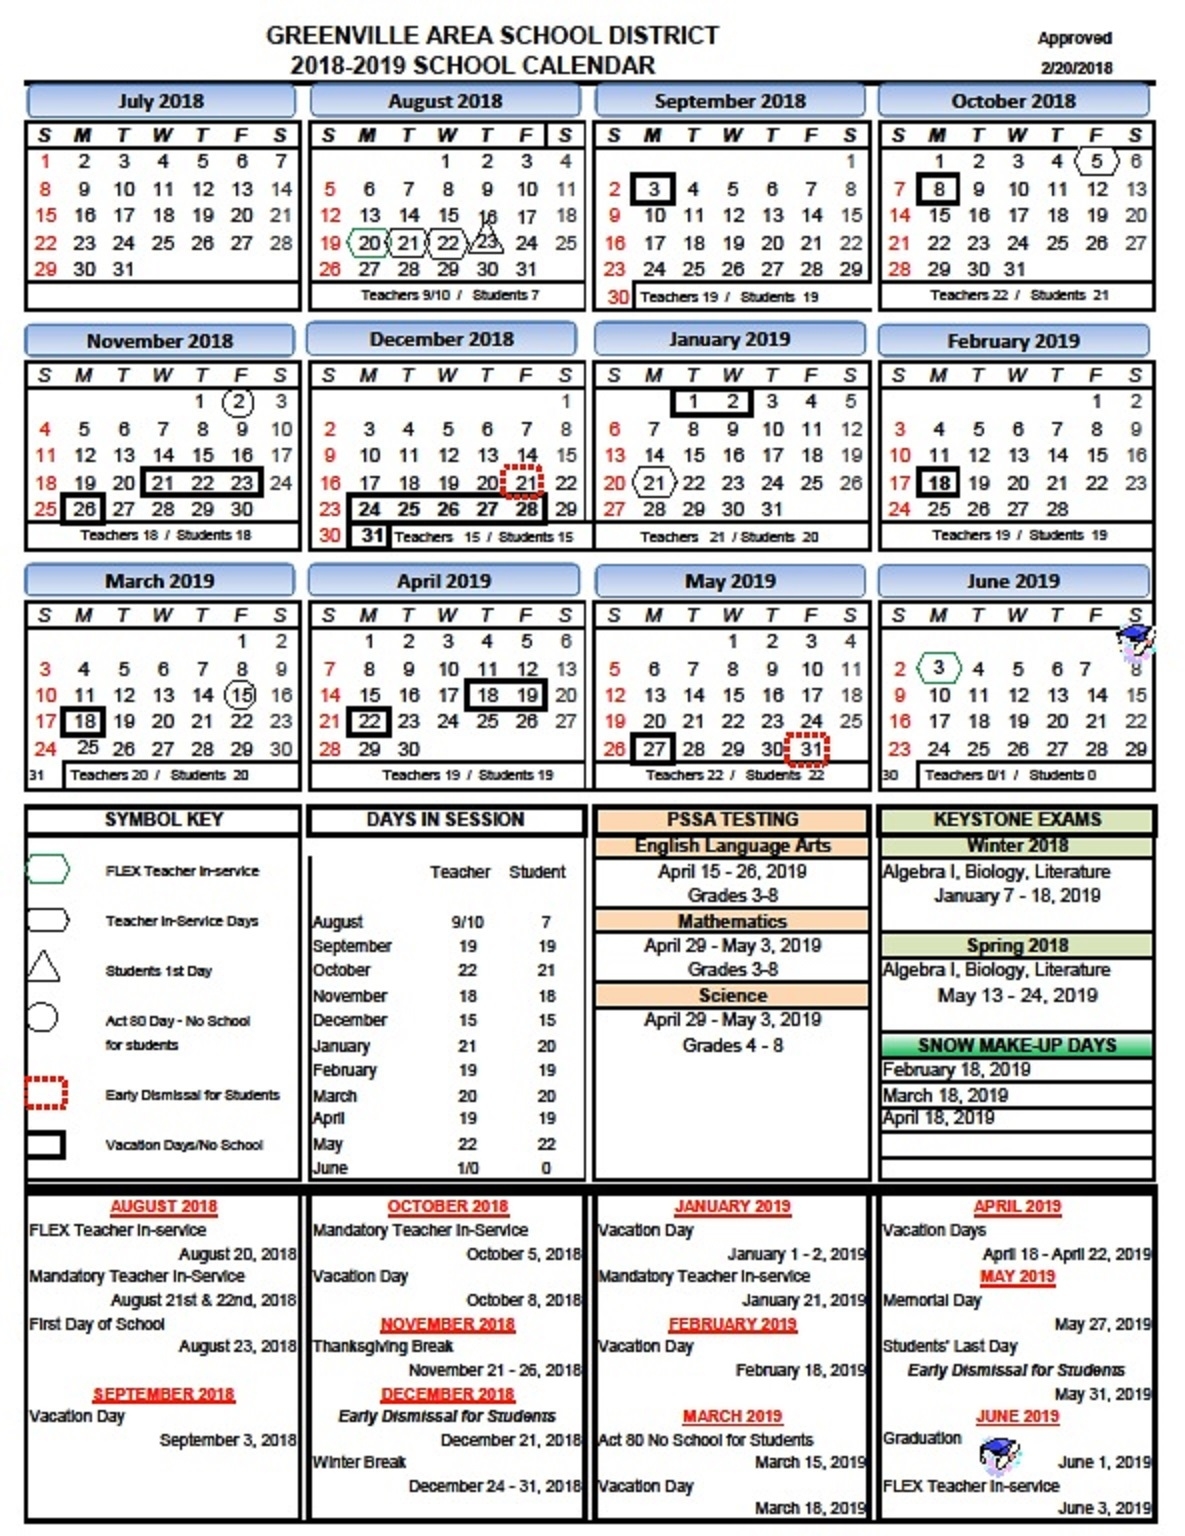 Greenville Area School District Extraordinary School Calendar Greenville Sc